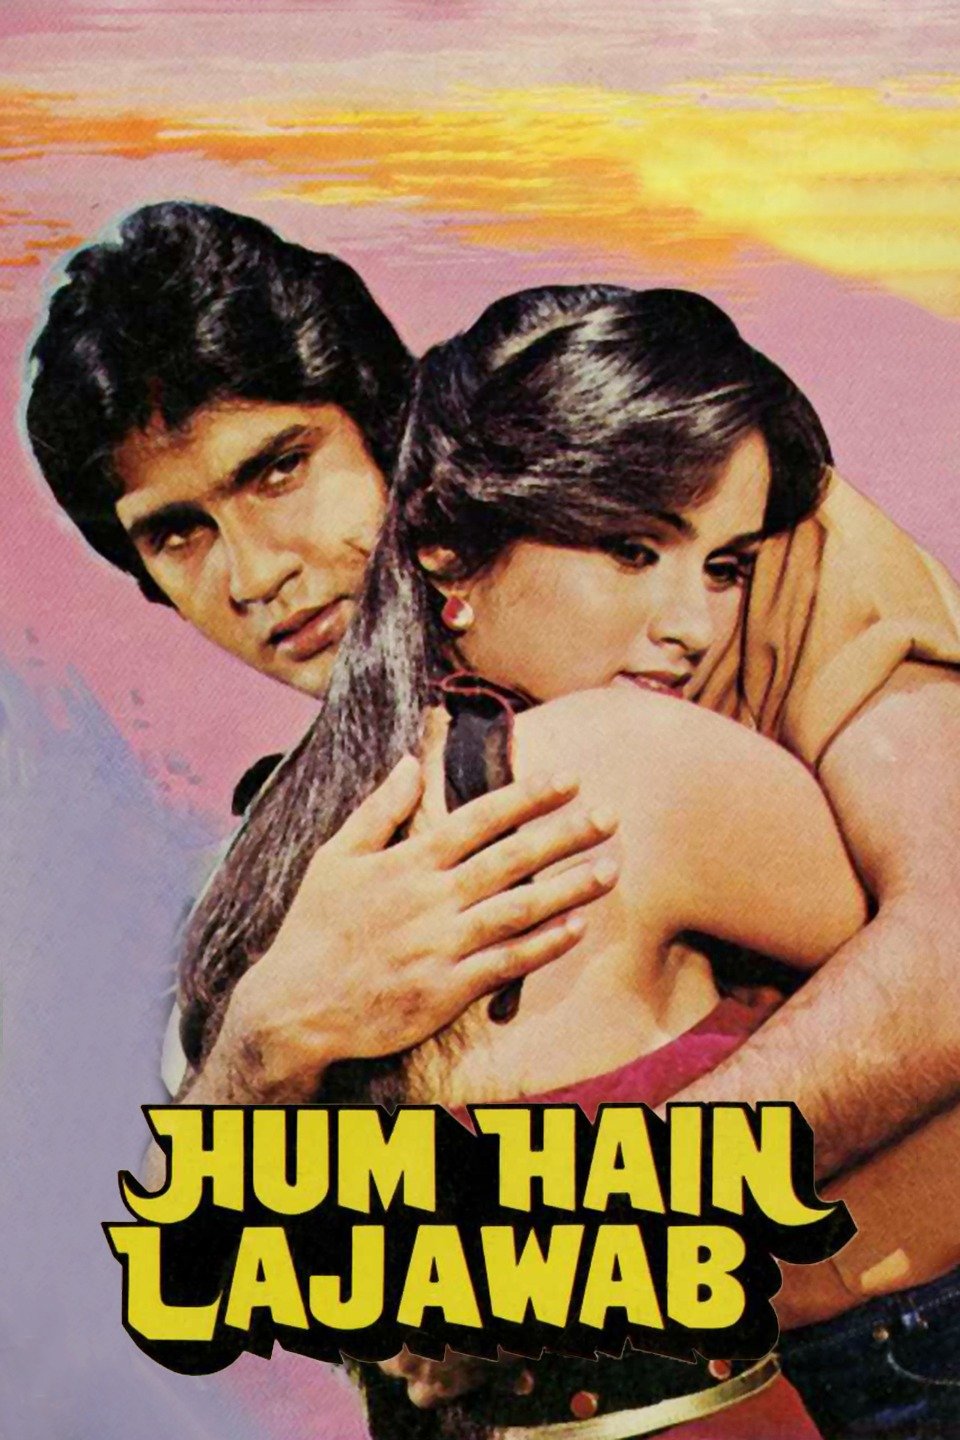 Hum Hain Lajawaab Poster